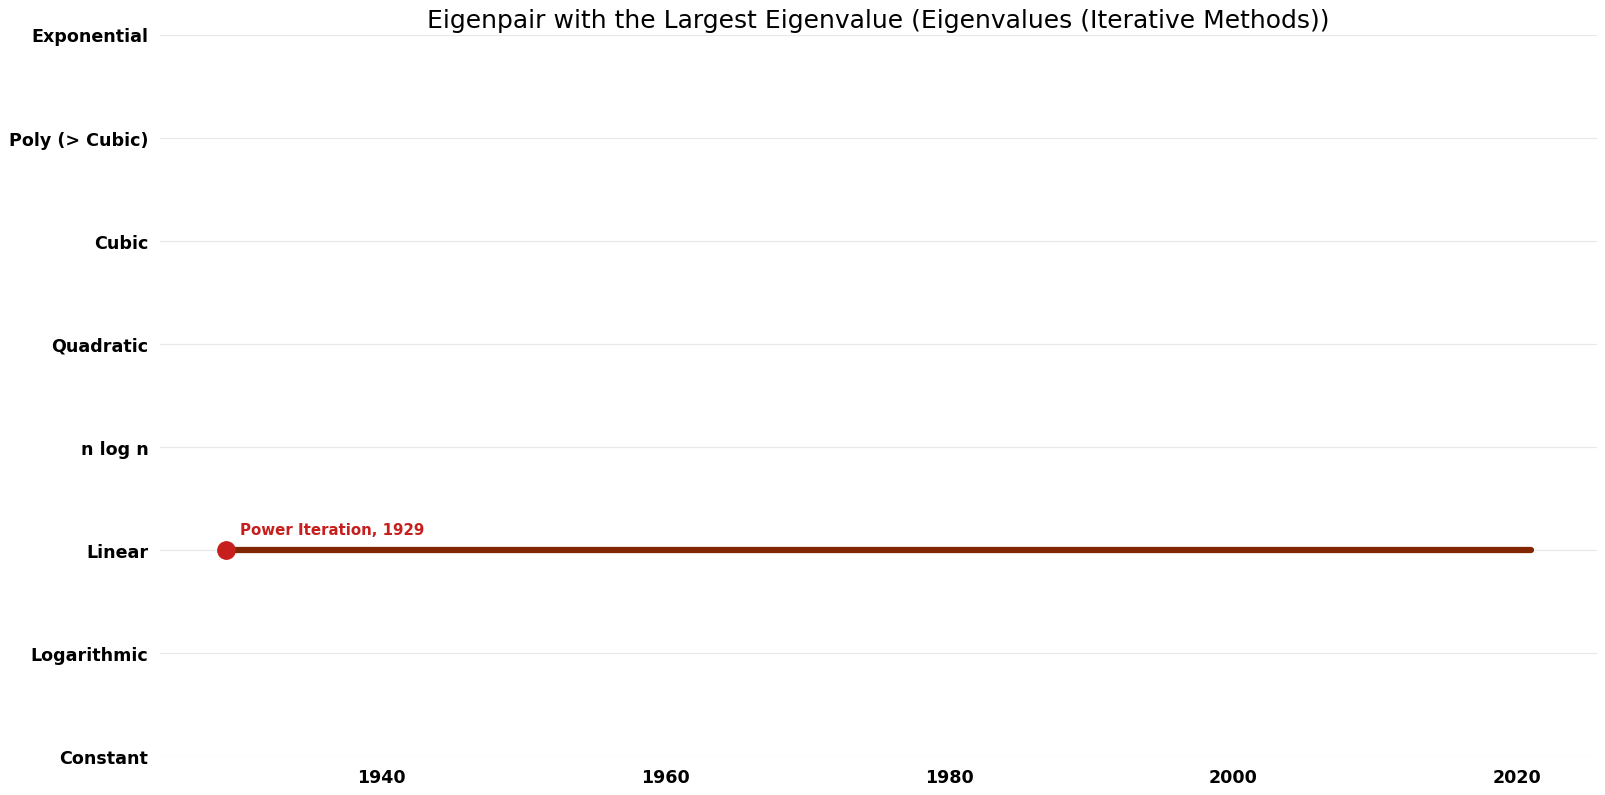 File:Eigenvalues (Iterative Methods) - Eigenpair with the Largest Eigenvalue - Time.png